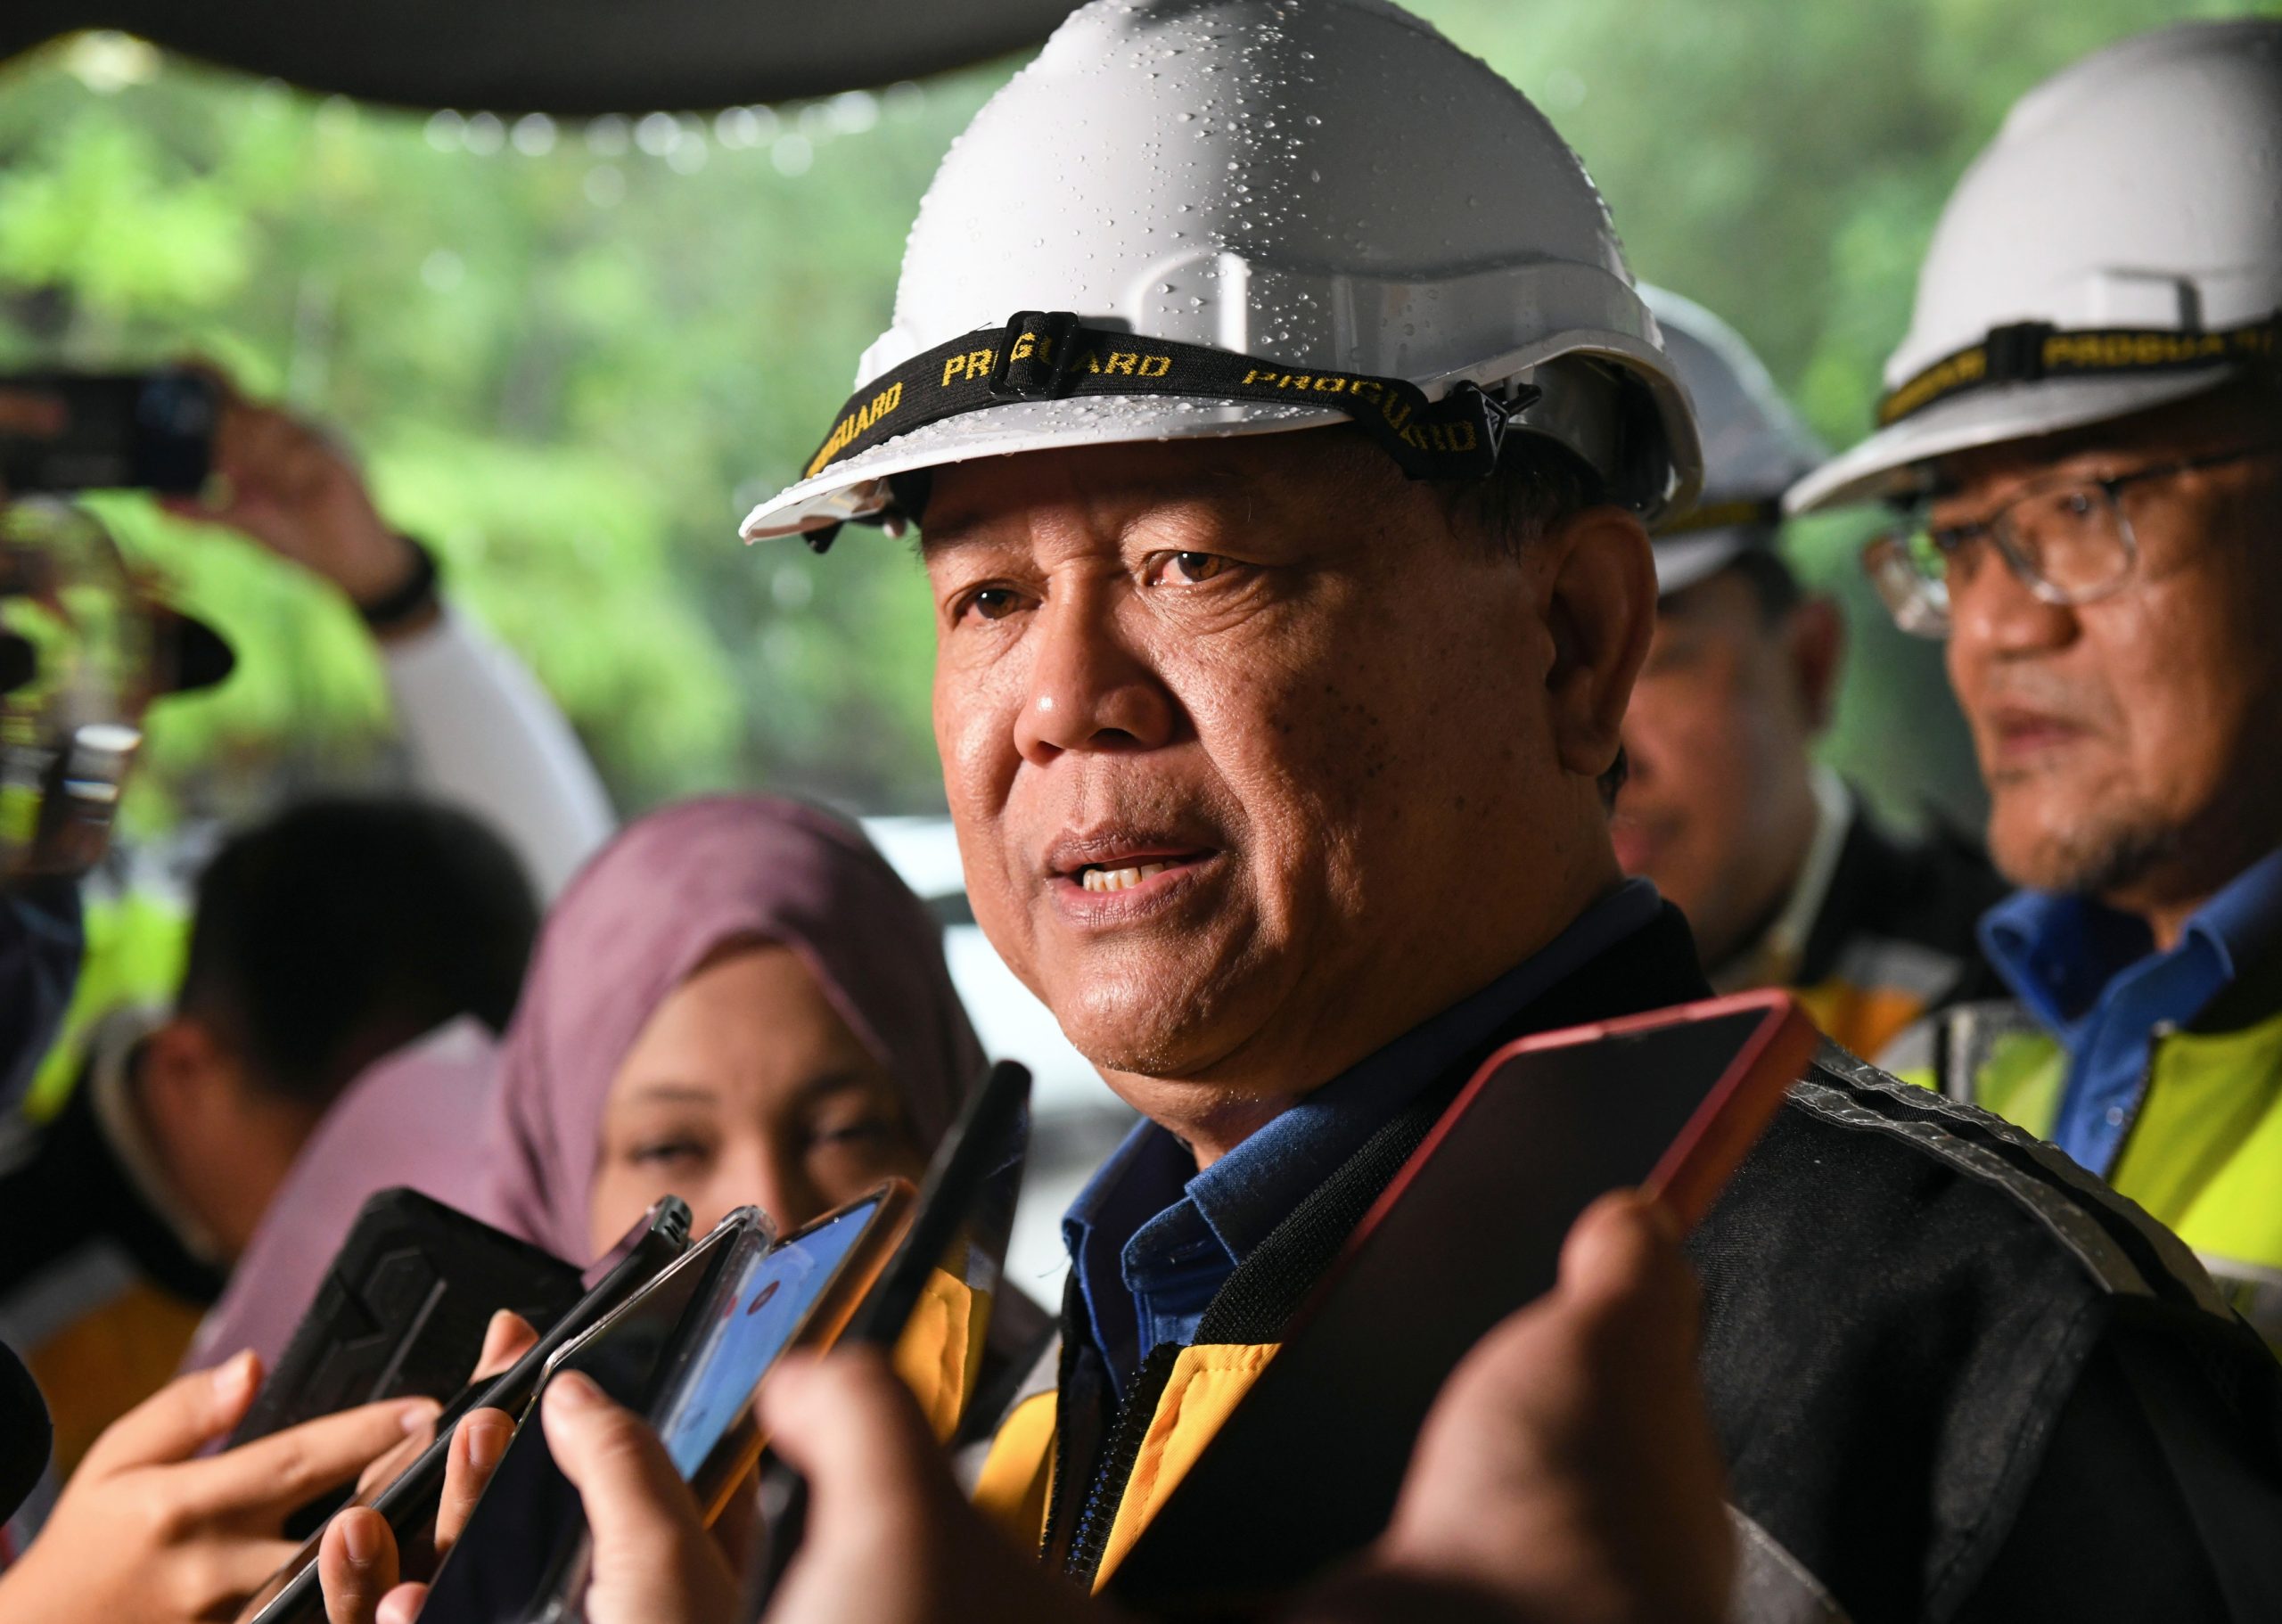 RM73.4 mil spent on pothole repair, street furniture maintenance: Works Ministry